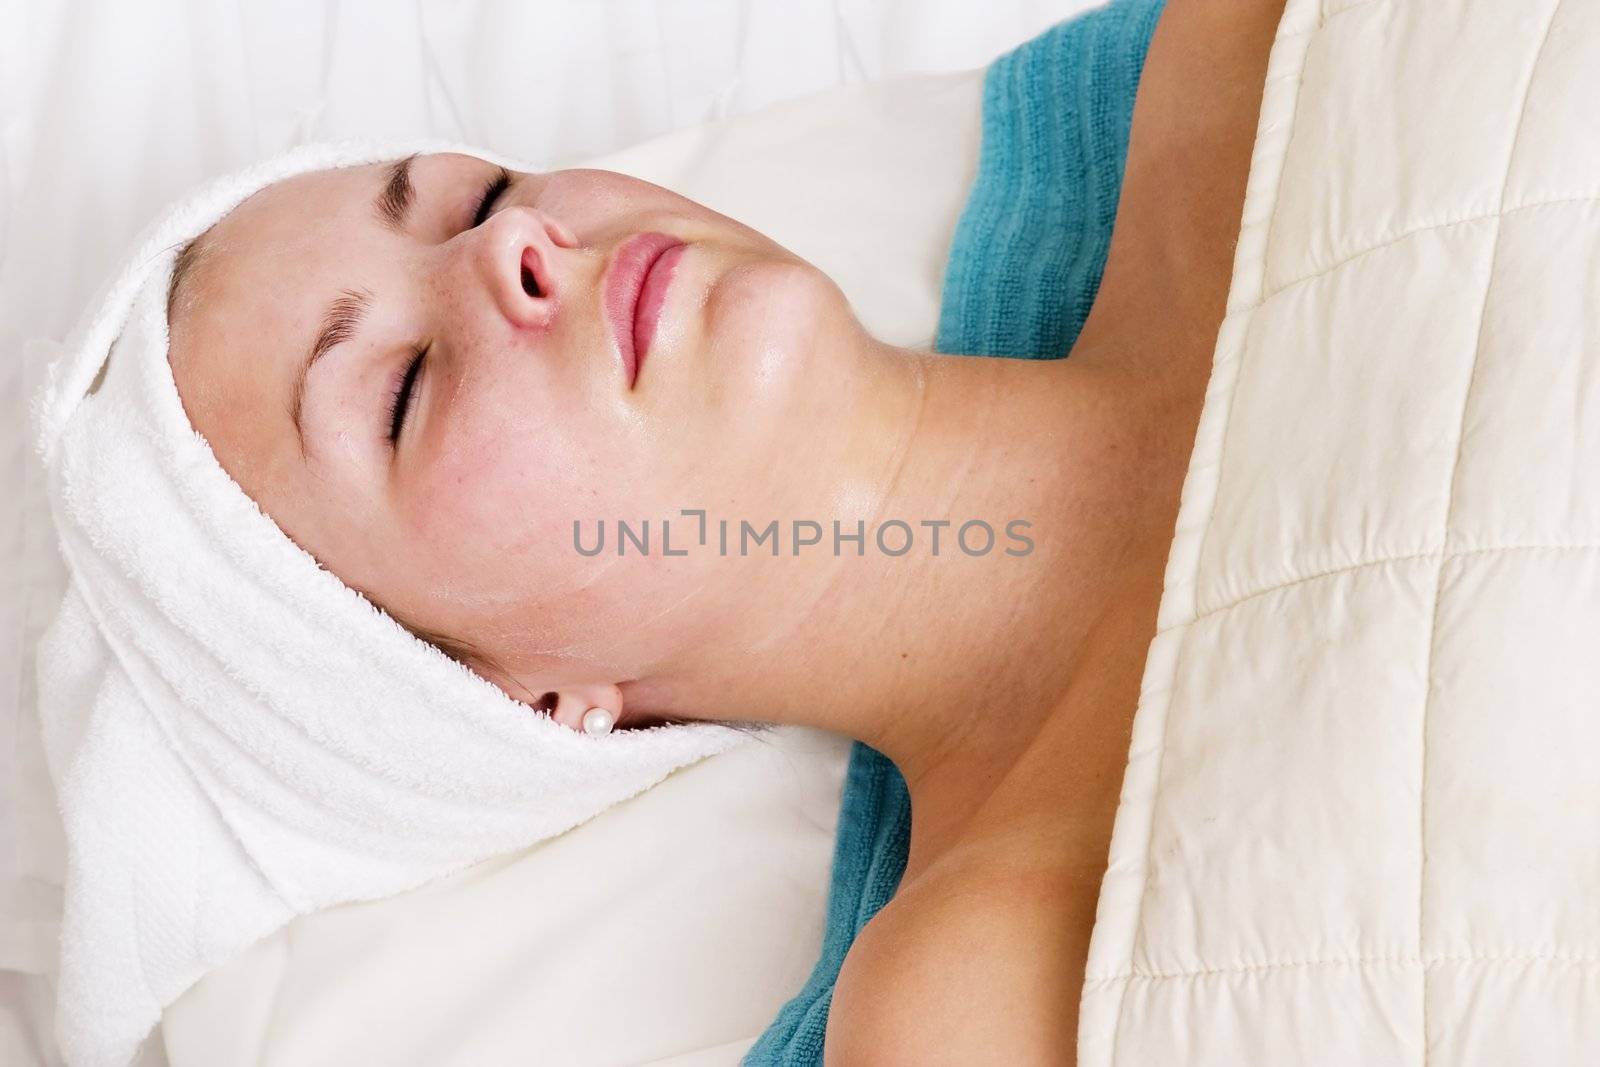 A woman recieving a facial at a beauty spa